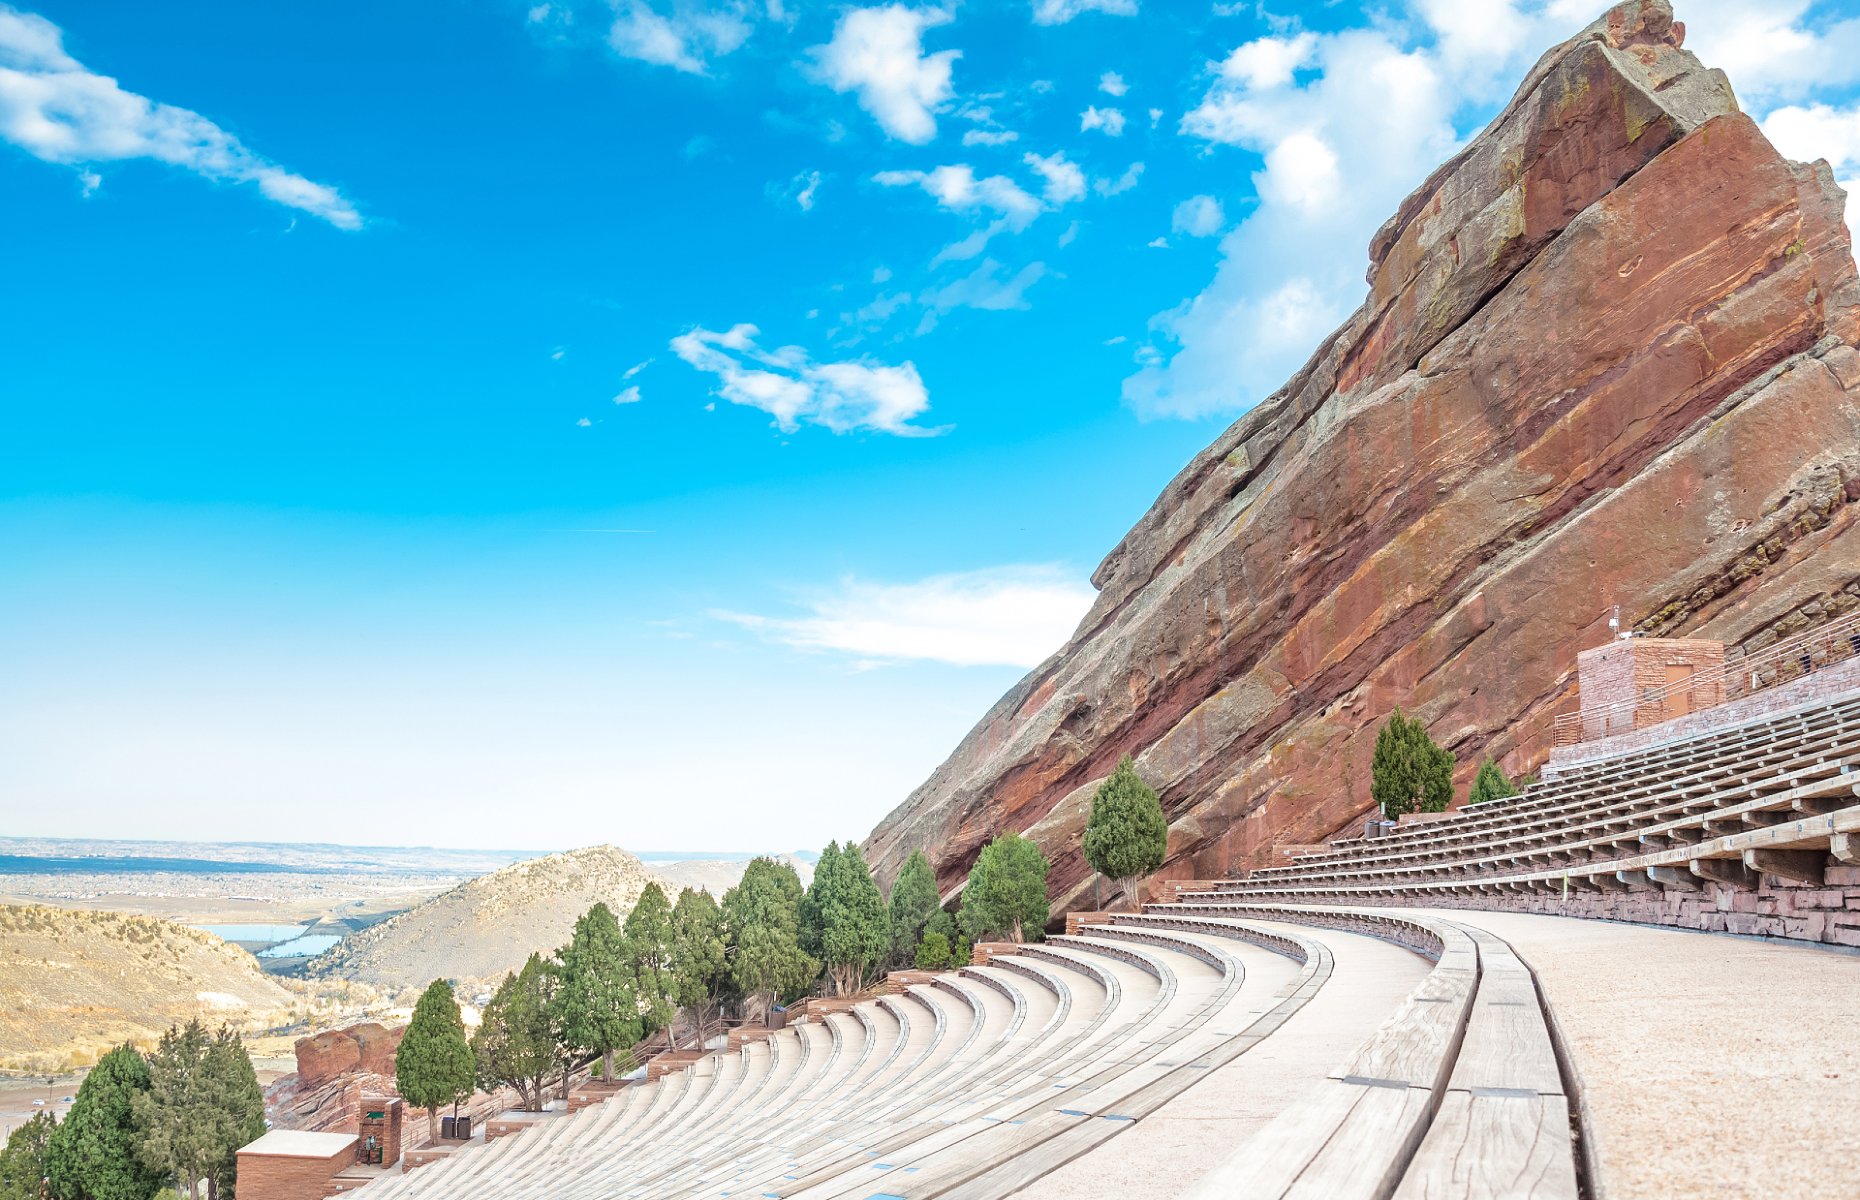 Red Rocks Amphitheatre (Image: NaughtyNut/Shutterstock)